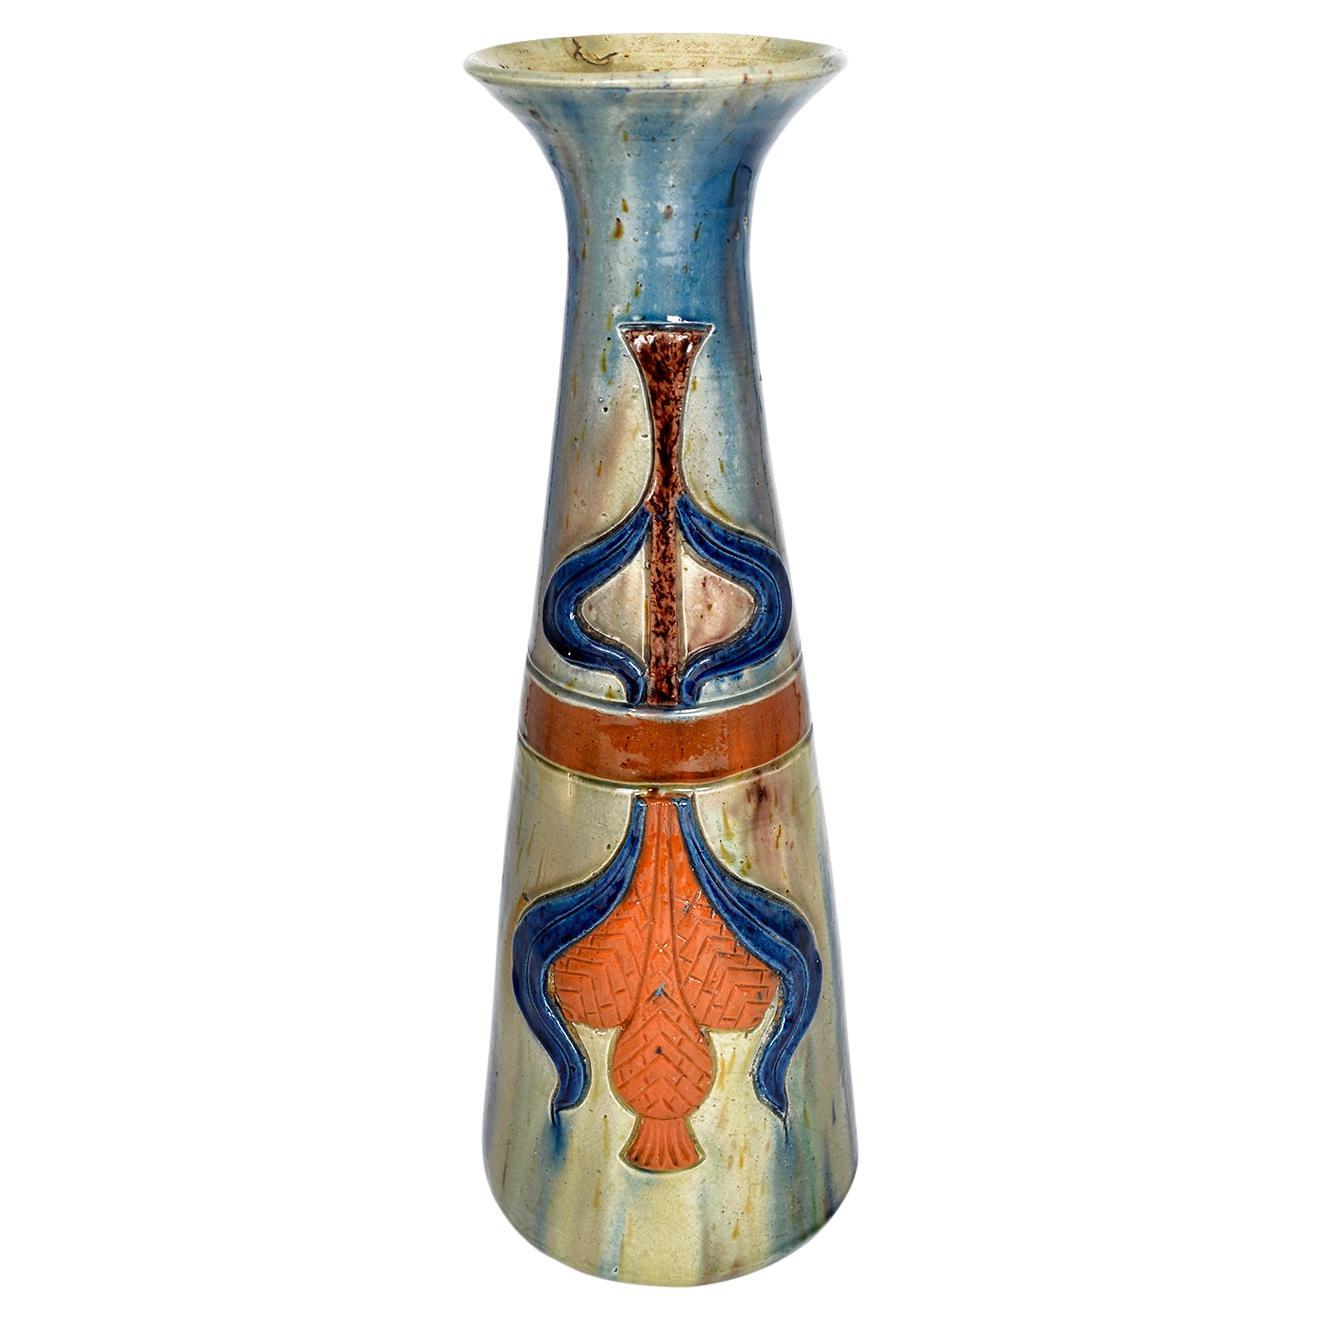 Flemish Studio Pottery Art Nouveau Drip Glazed Earthenware Vase 1900s Folk Art